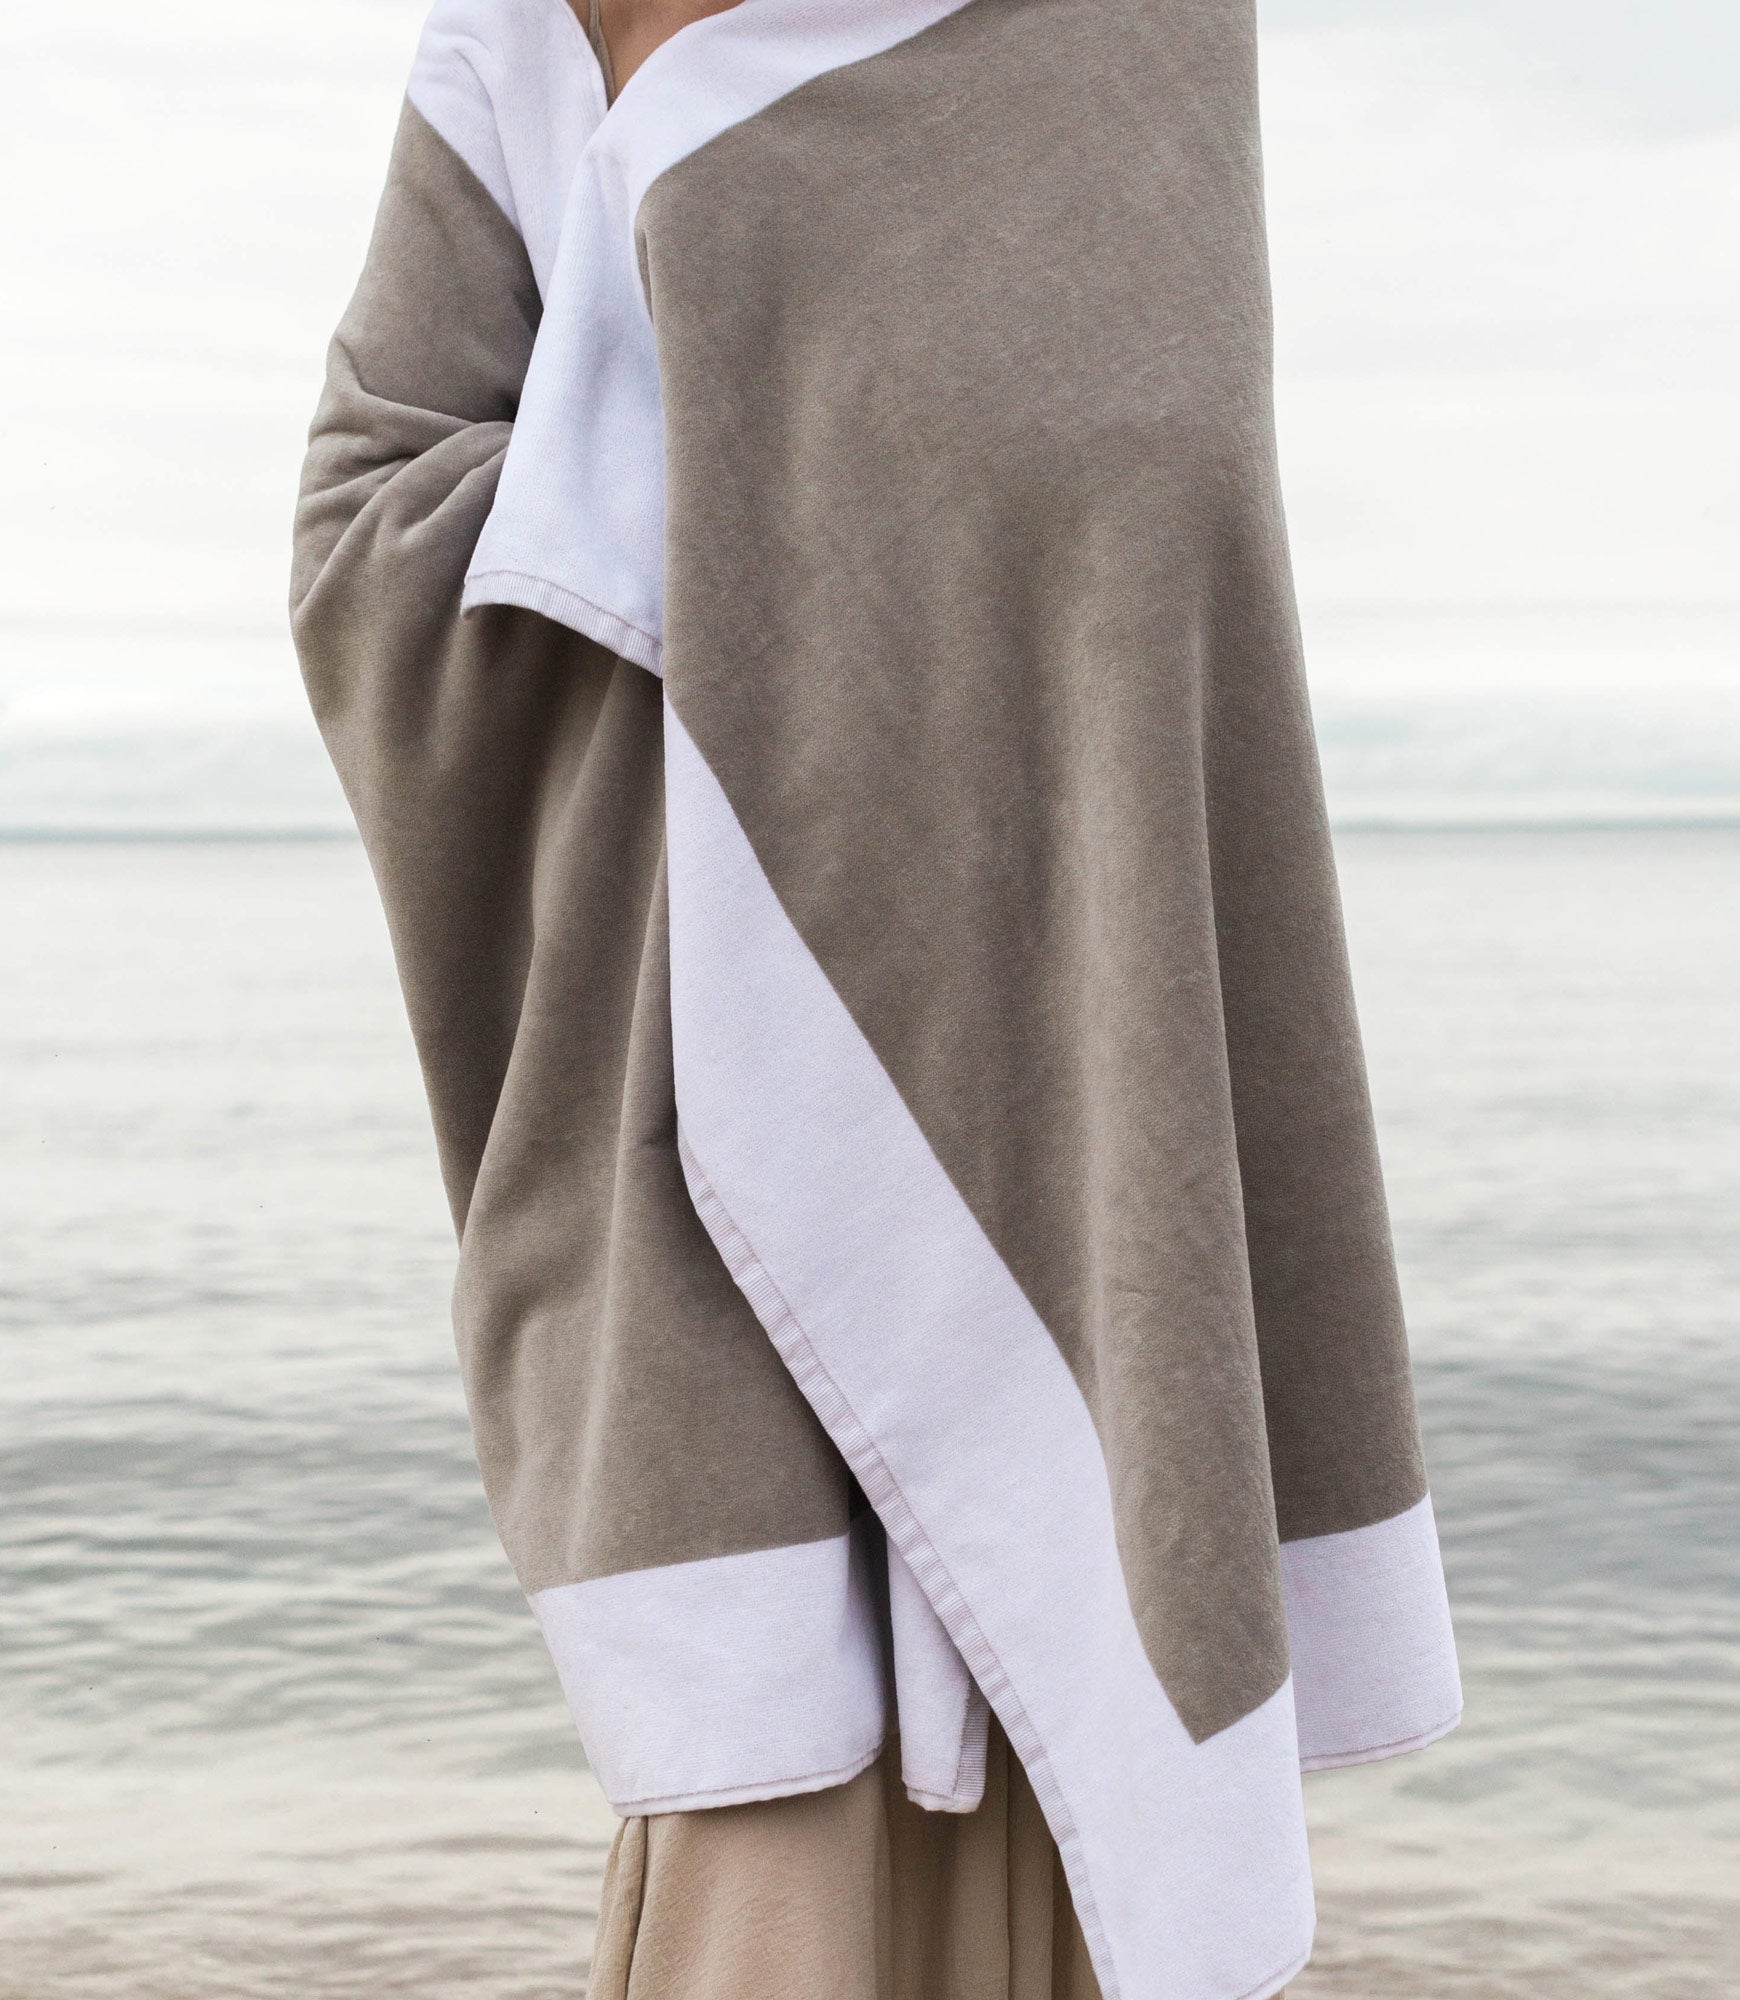 Soleil Beach Towel White Trim On Model